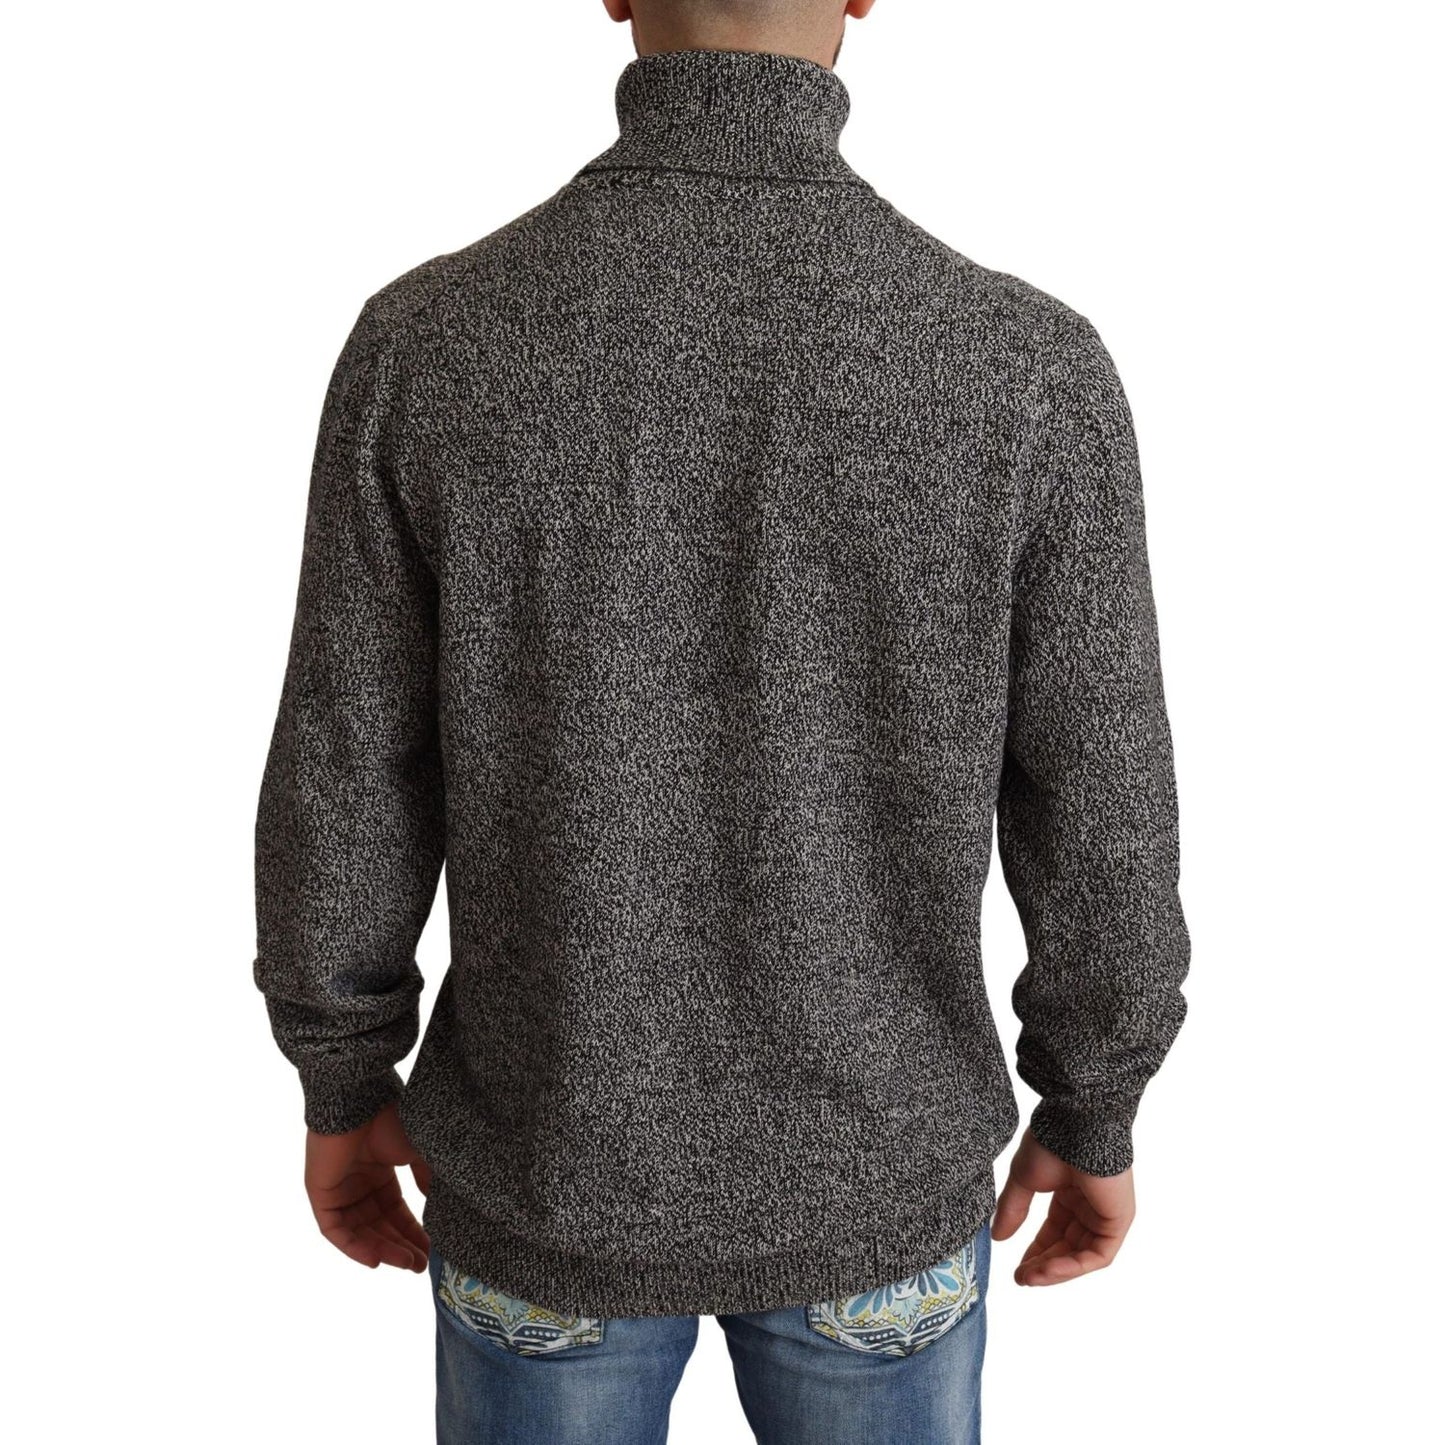 Dolce & Gabbana Elegant Gray Cashmere Turtleneck Sweater MAN SWEATERS gray-turtle-neck-cashmere-pullover-sweater IMG_0170-scaled-4e960f24-88e.jpg